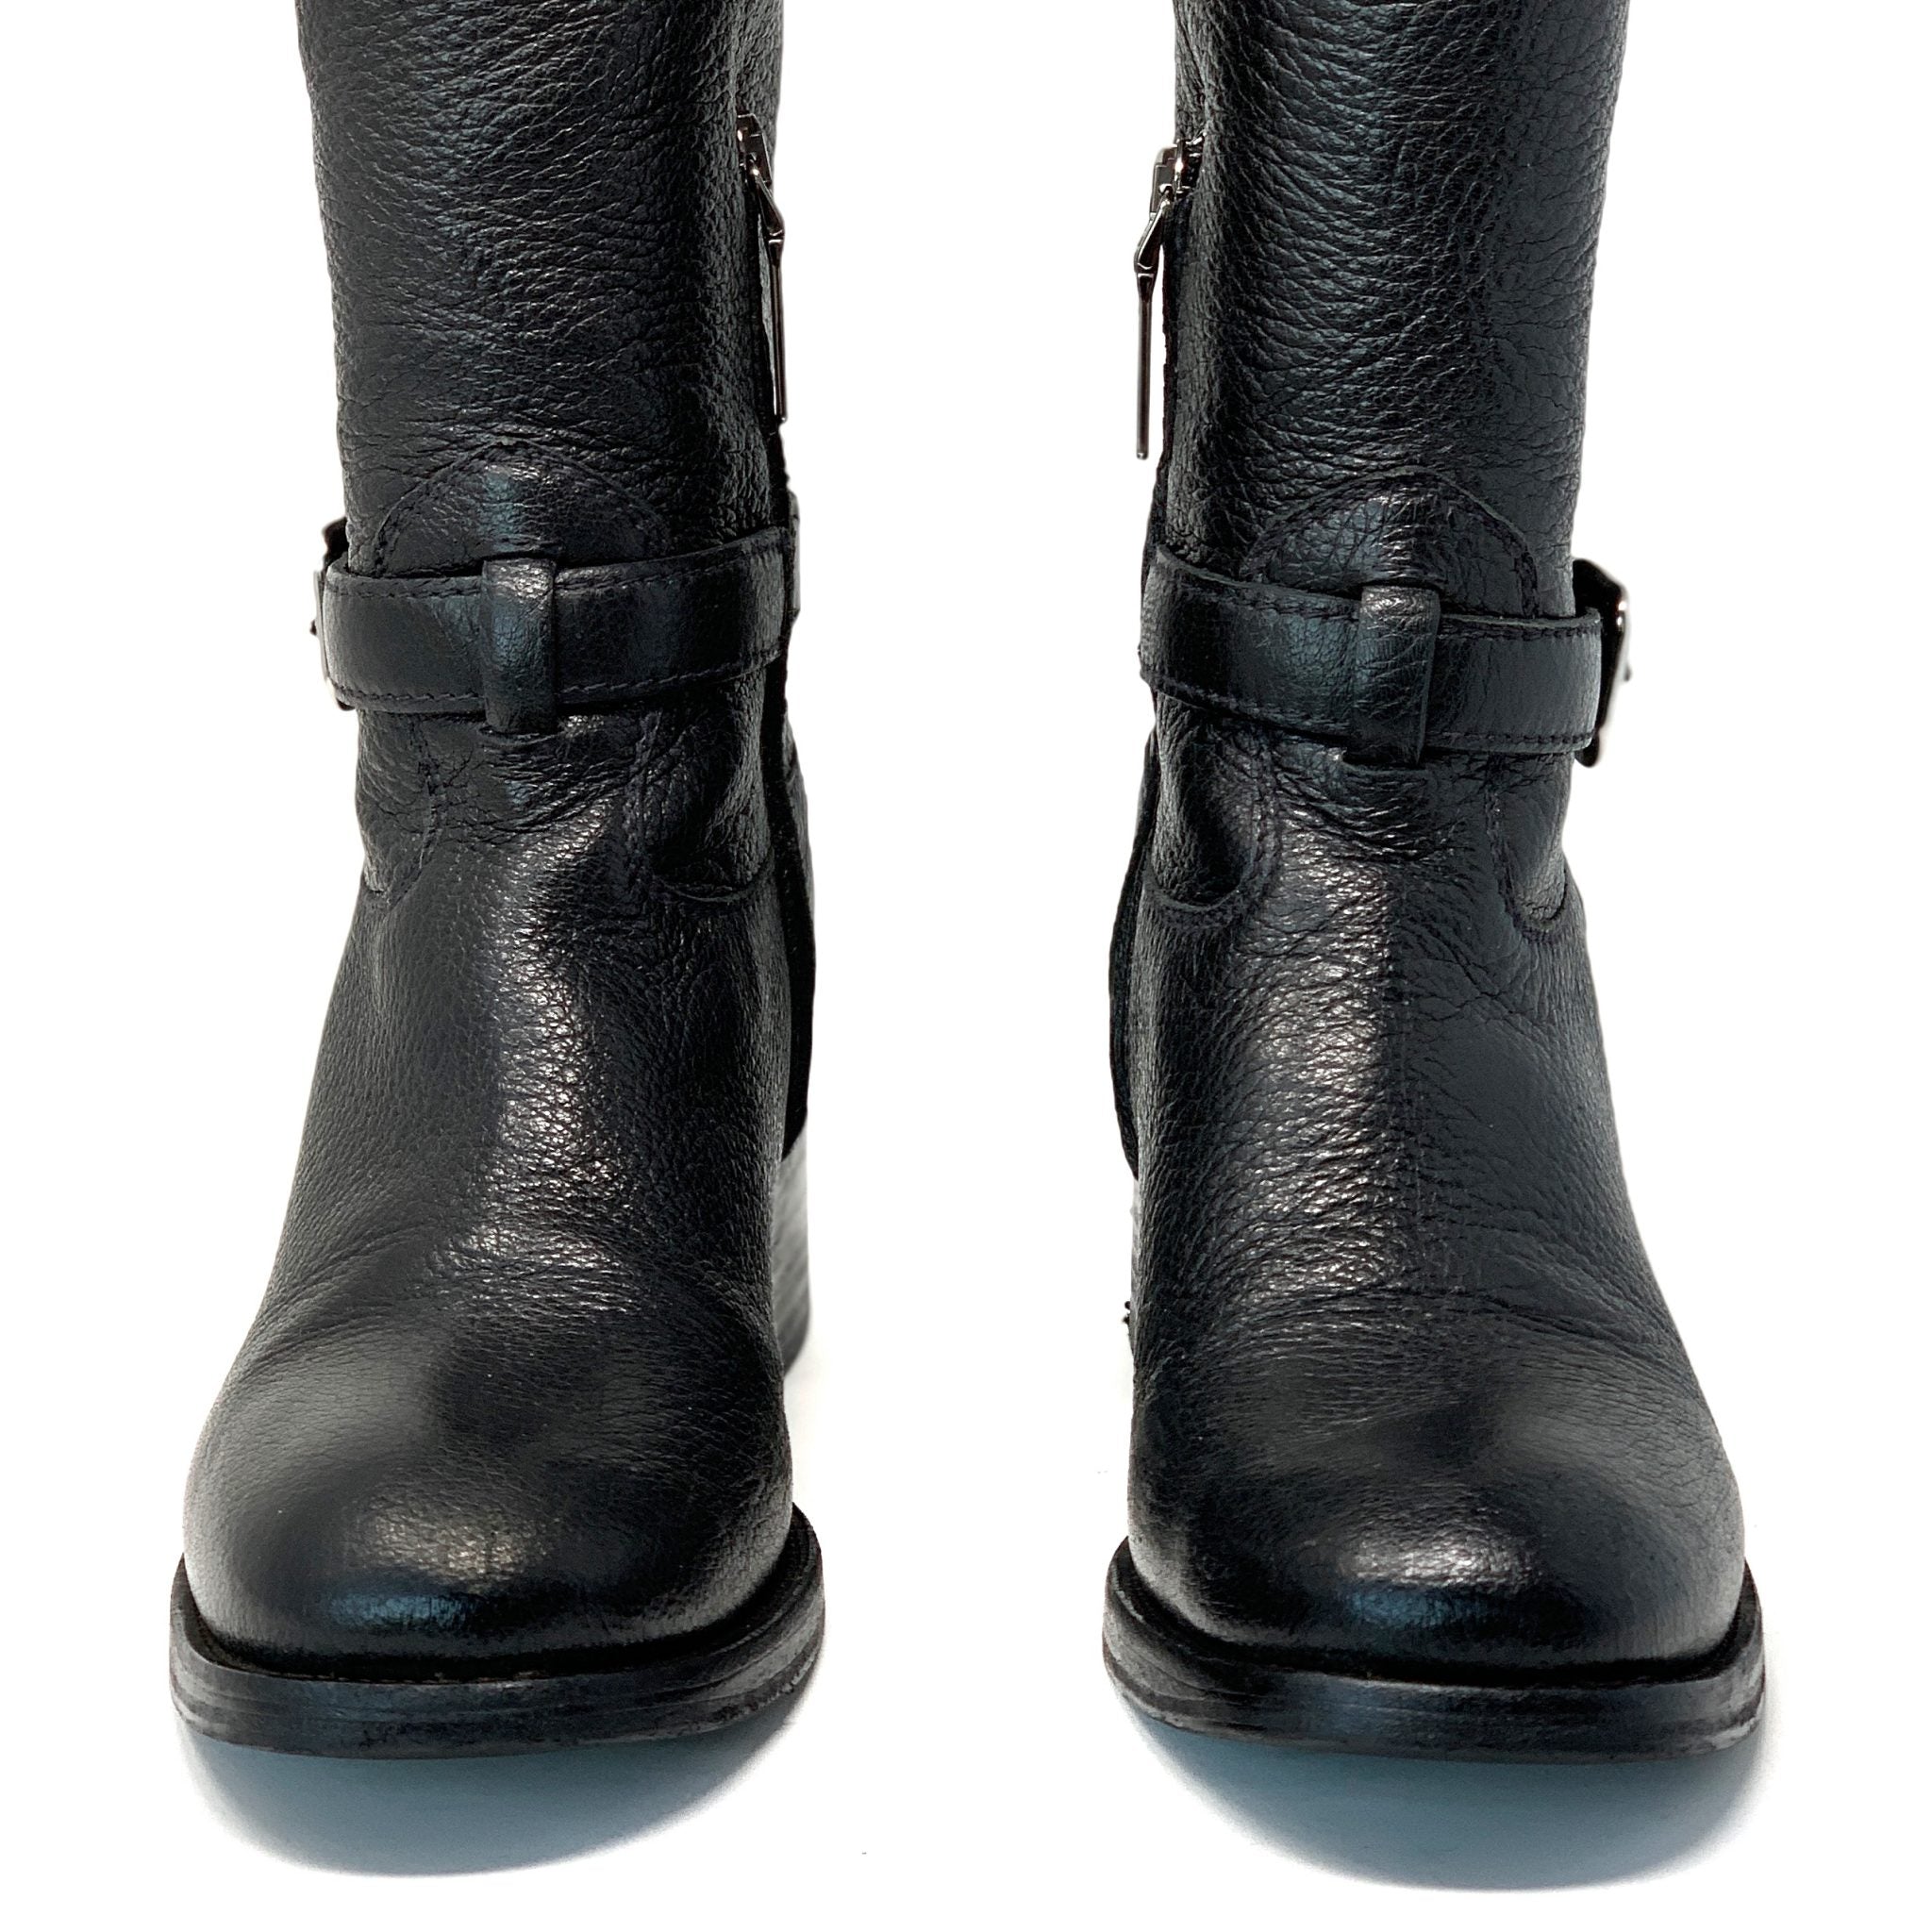 Prada Black High Riding Boots | Jadore Couture | Jadore Couture